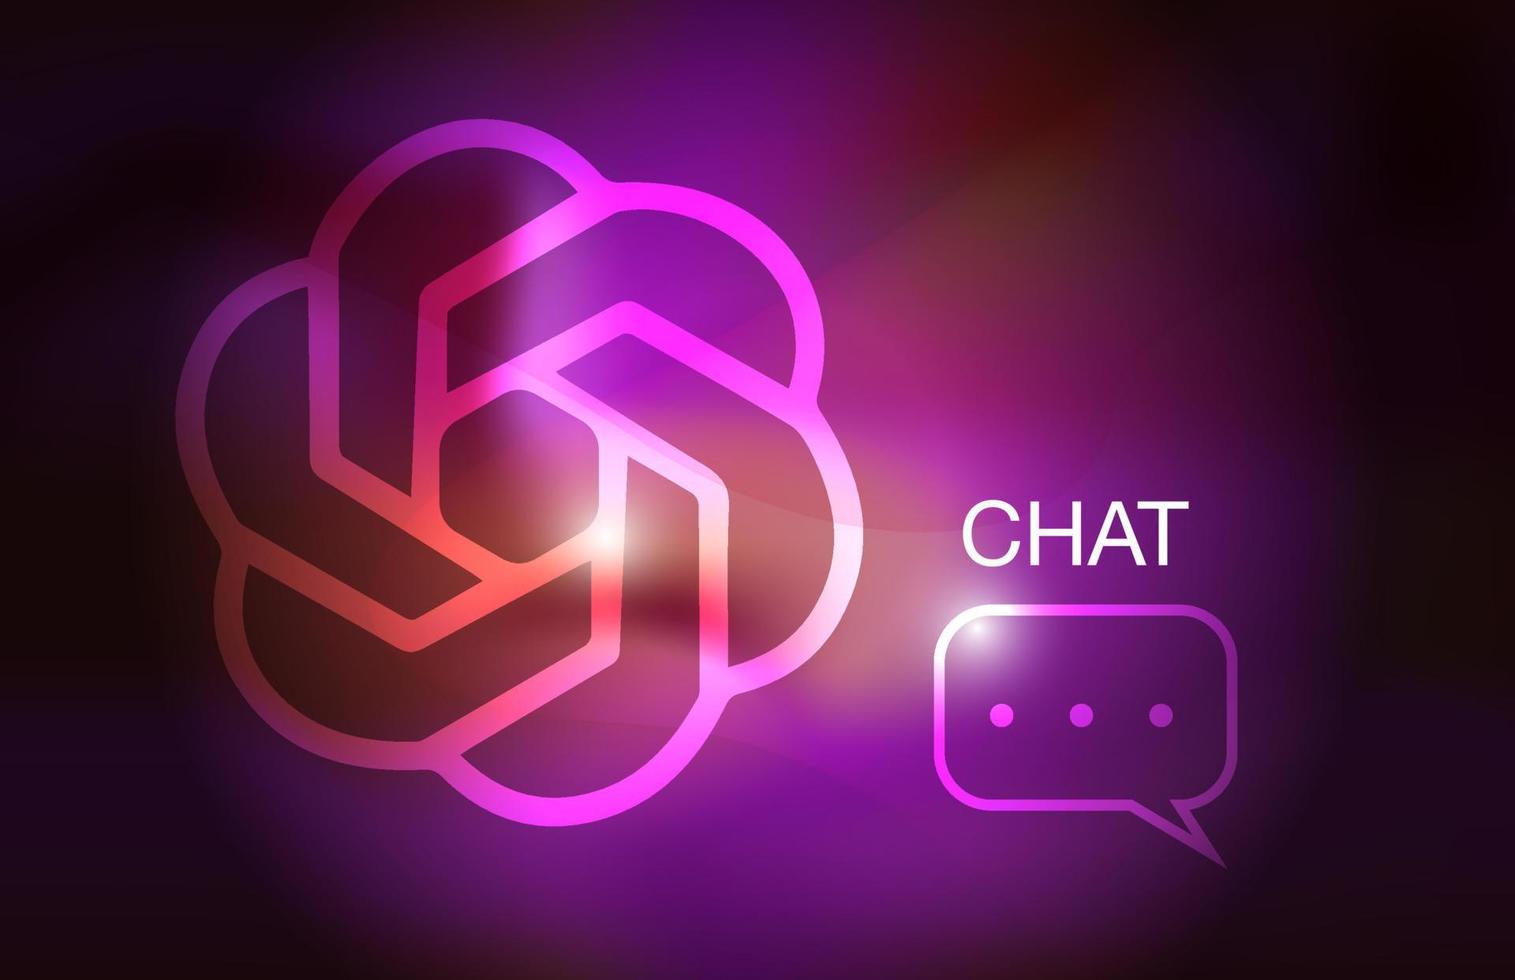 CHATgpt conversation method illustrations. Artificial intelligence chatbot. vector